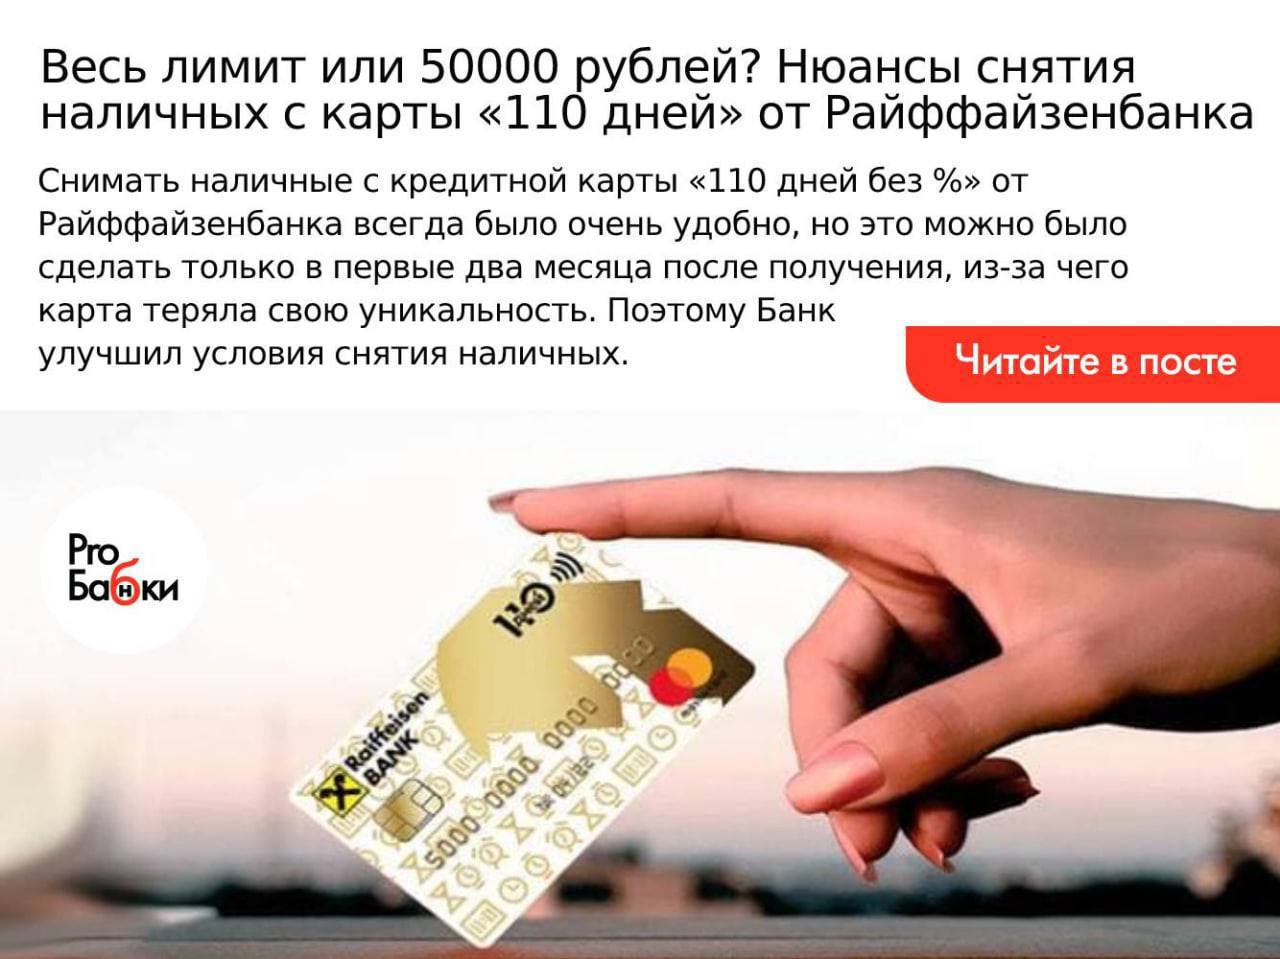 Кредитная карта на 50000 рублей. Наличная карта райффайзен